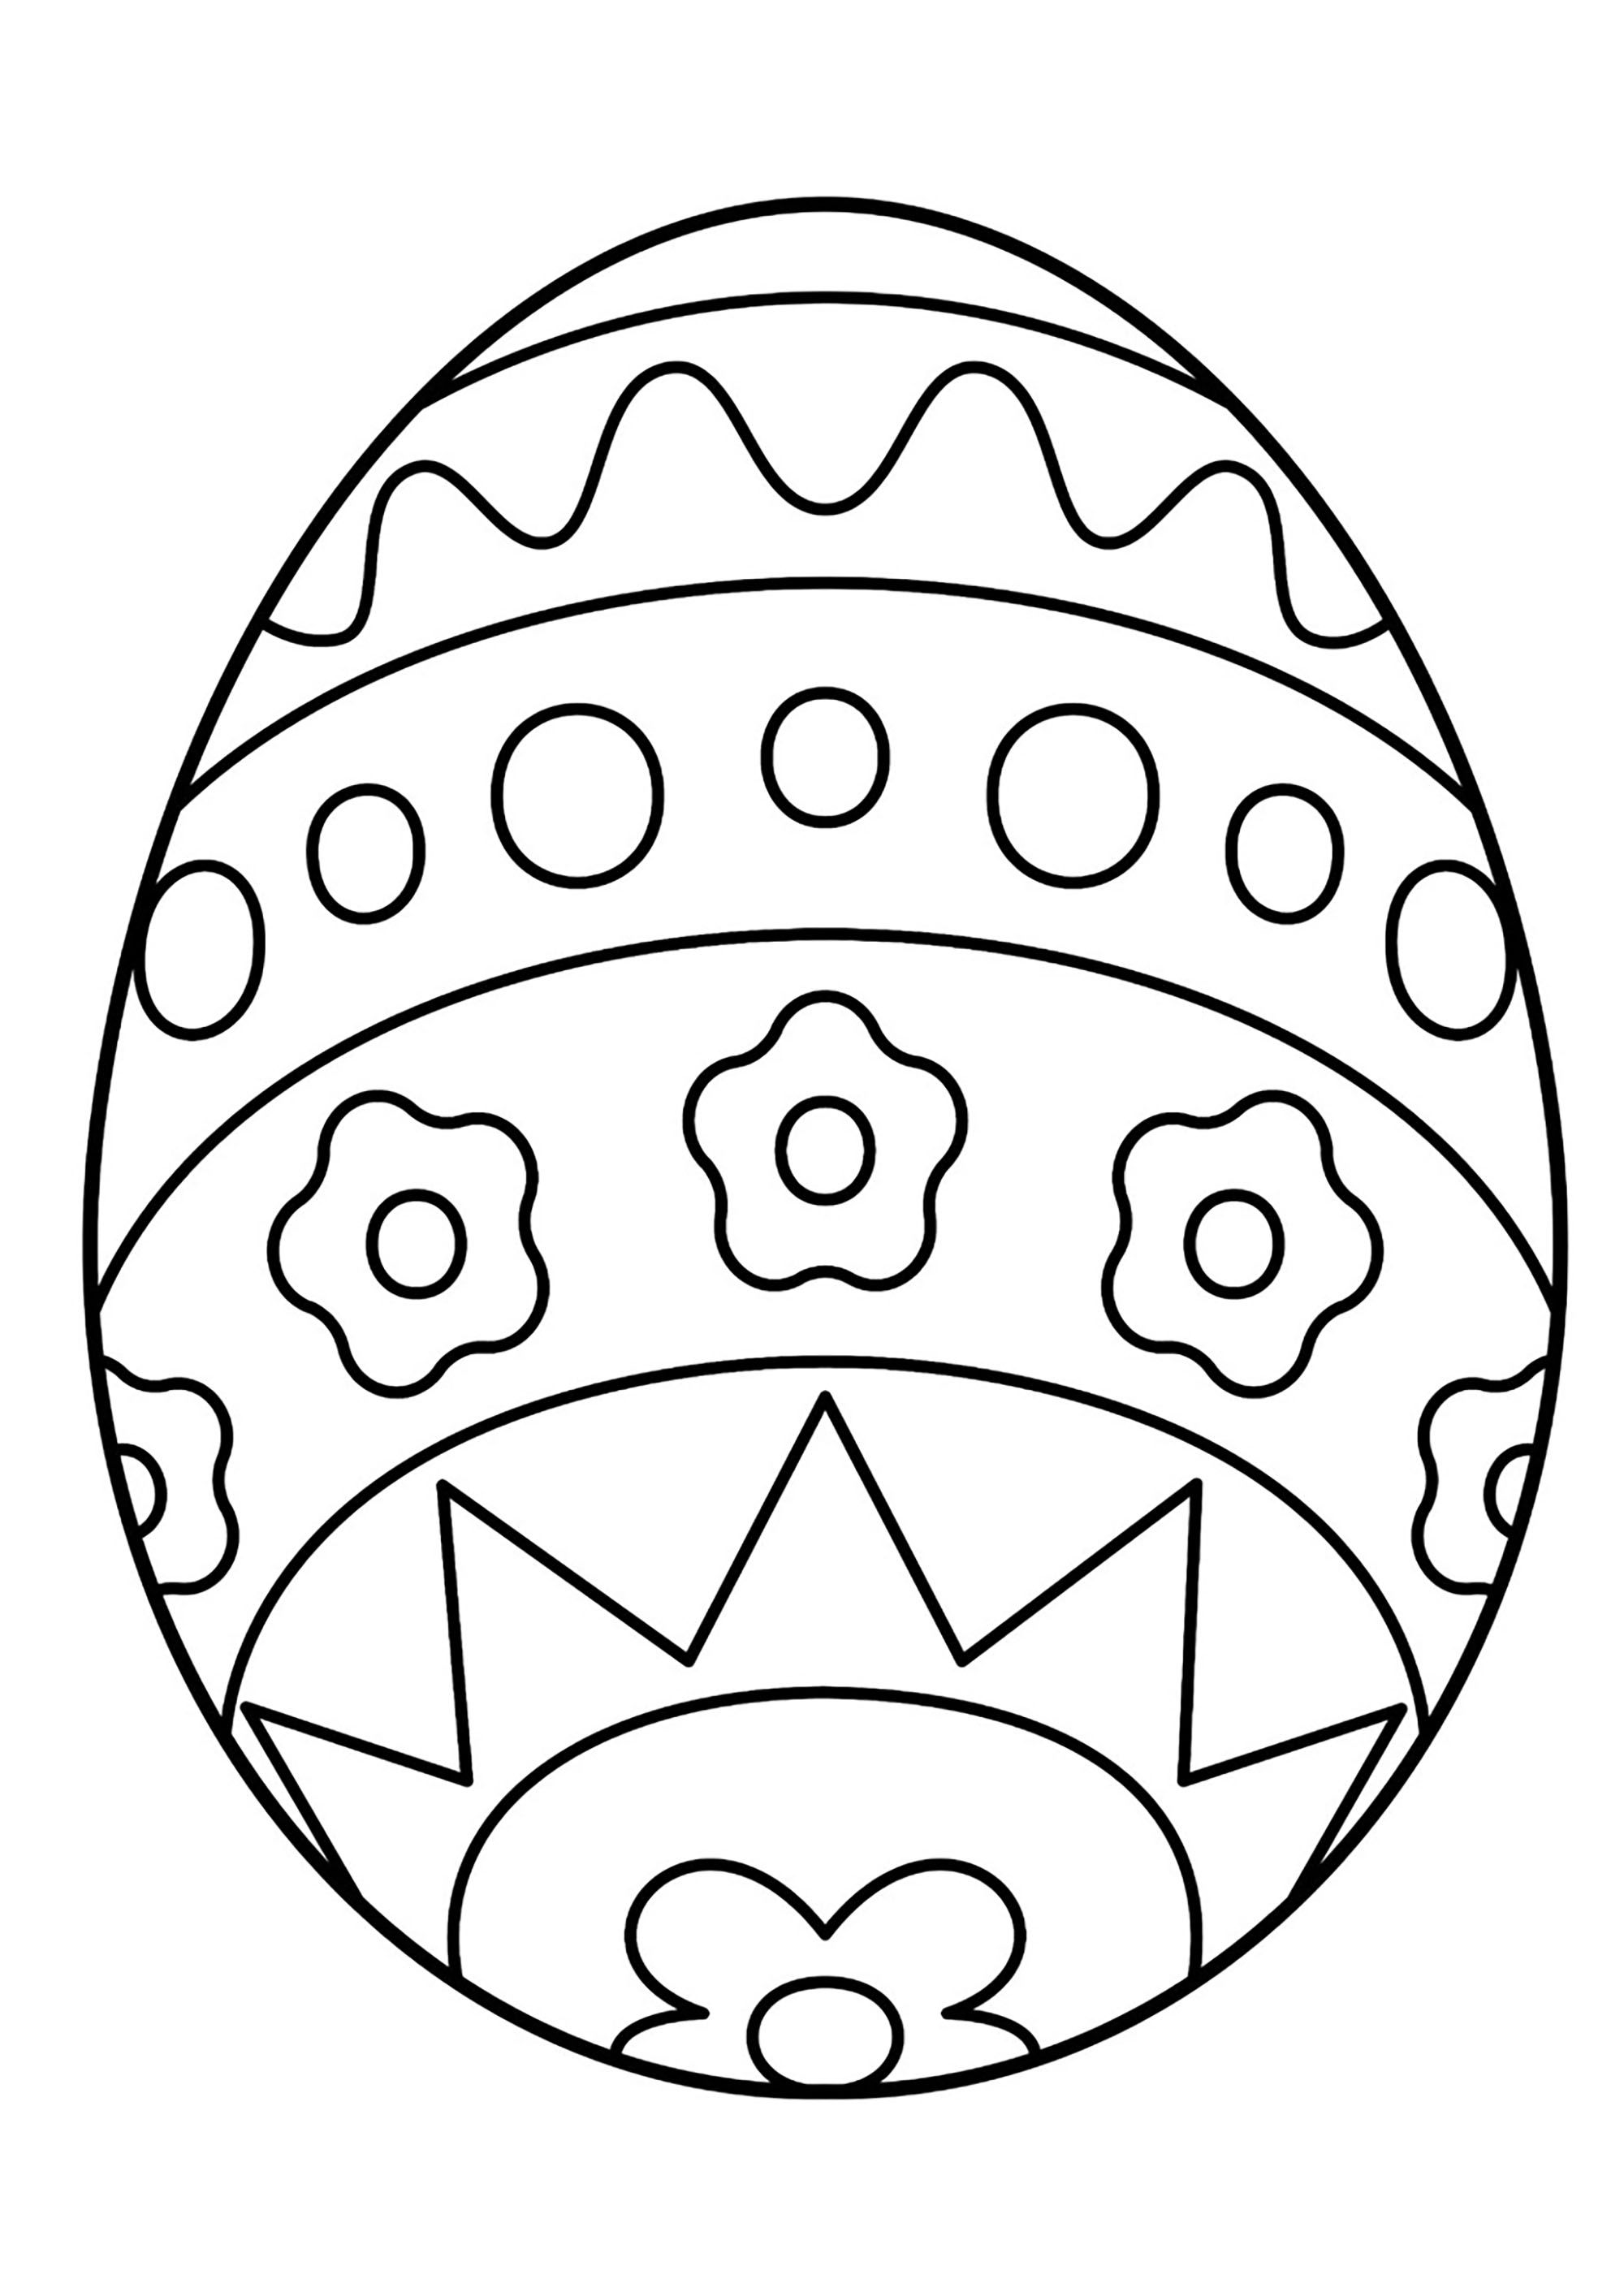 Huevo de Pascua con motivos sencillos